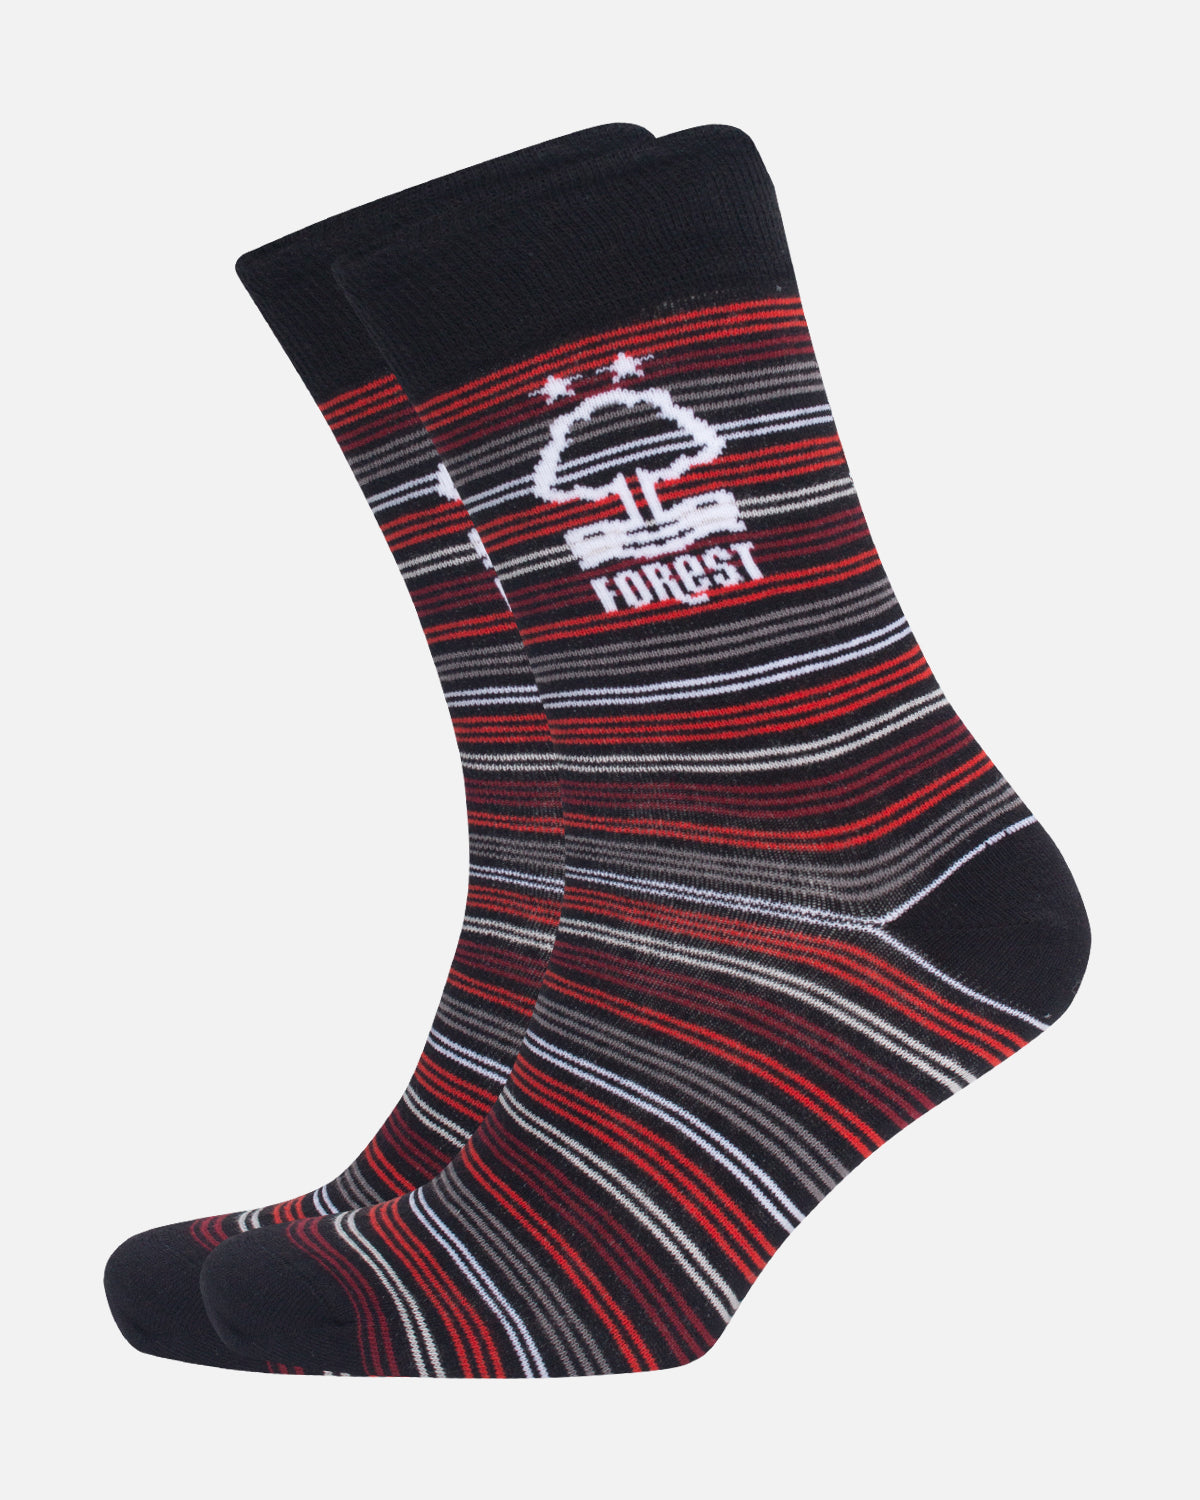 NFFC Multi Stripe Socks